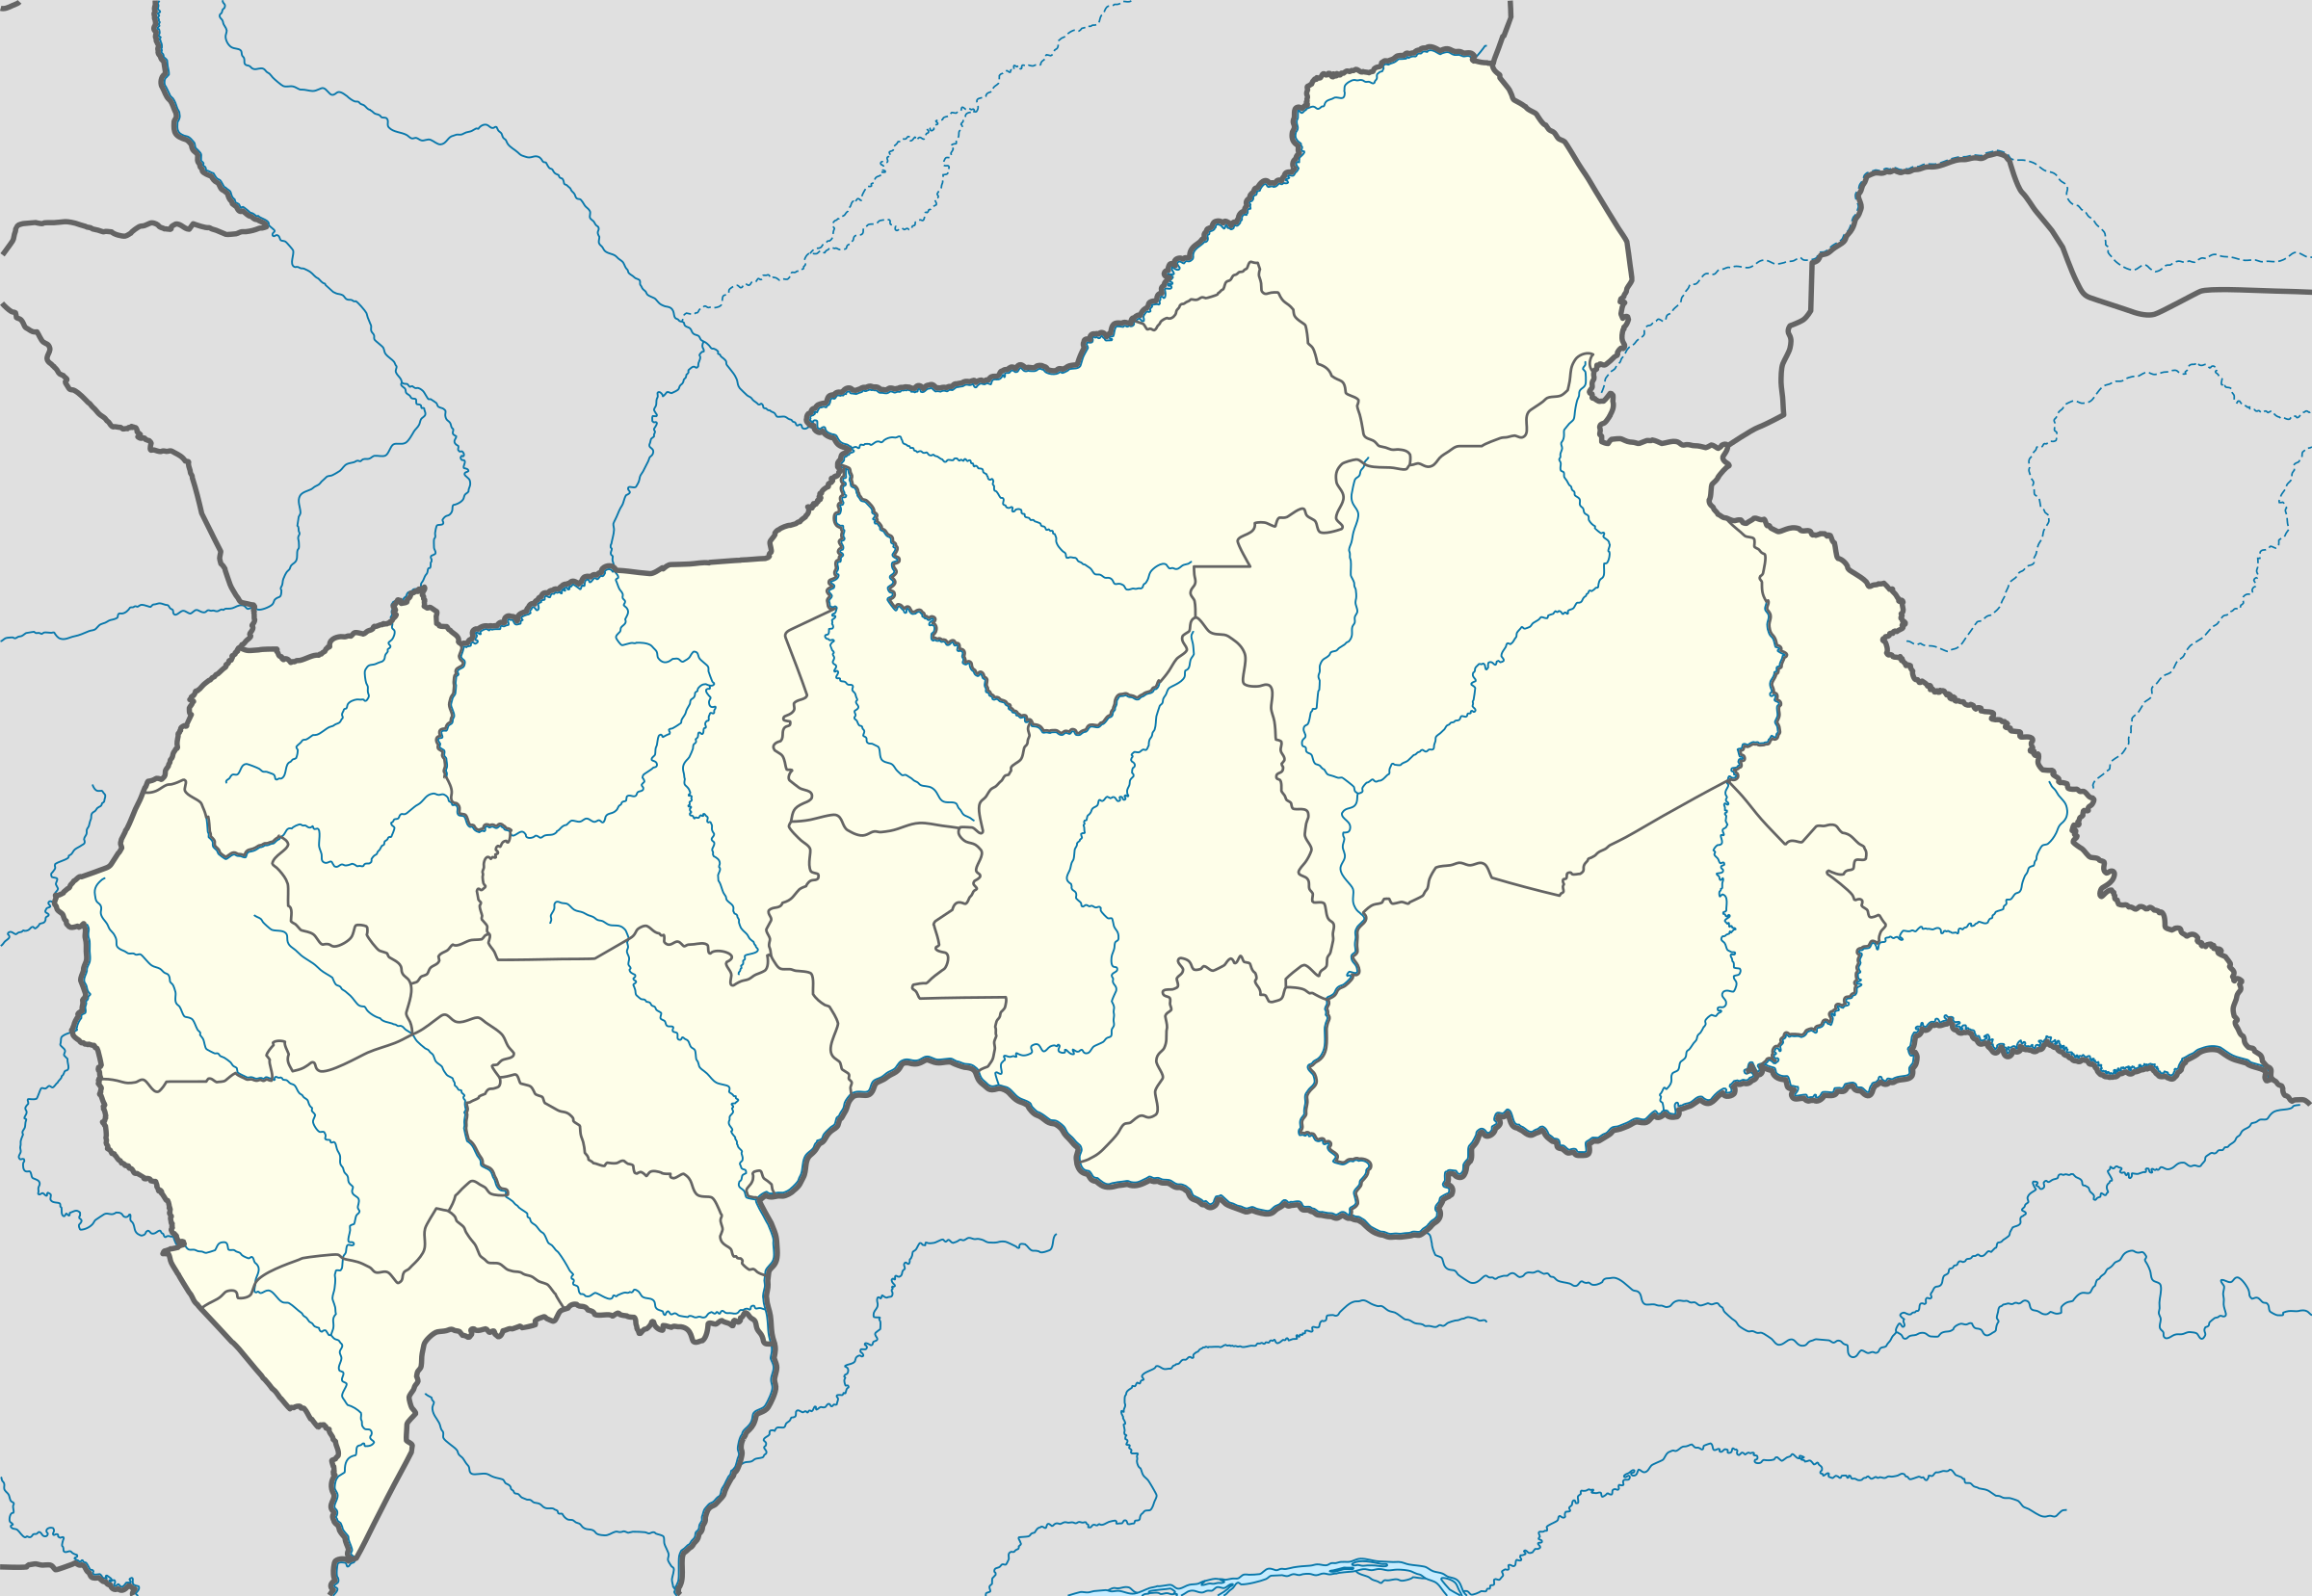 Central African Republic Civil War detailed map/doc is located in Central African Republic